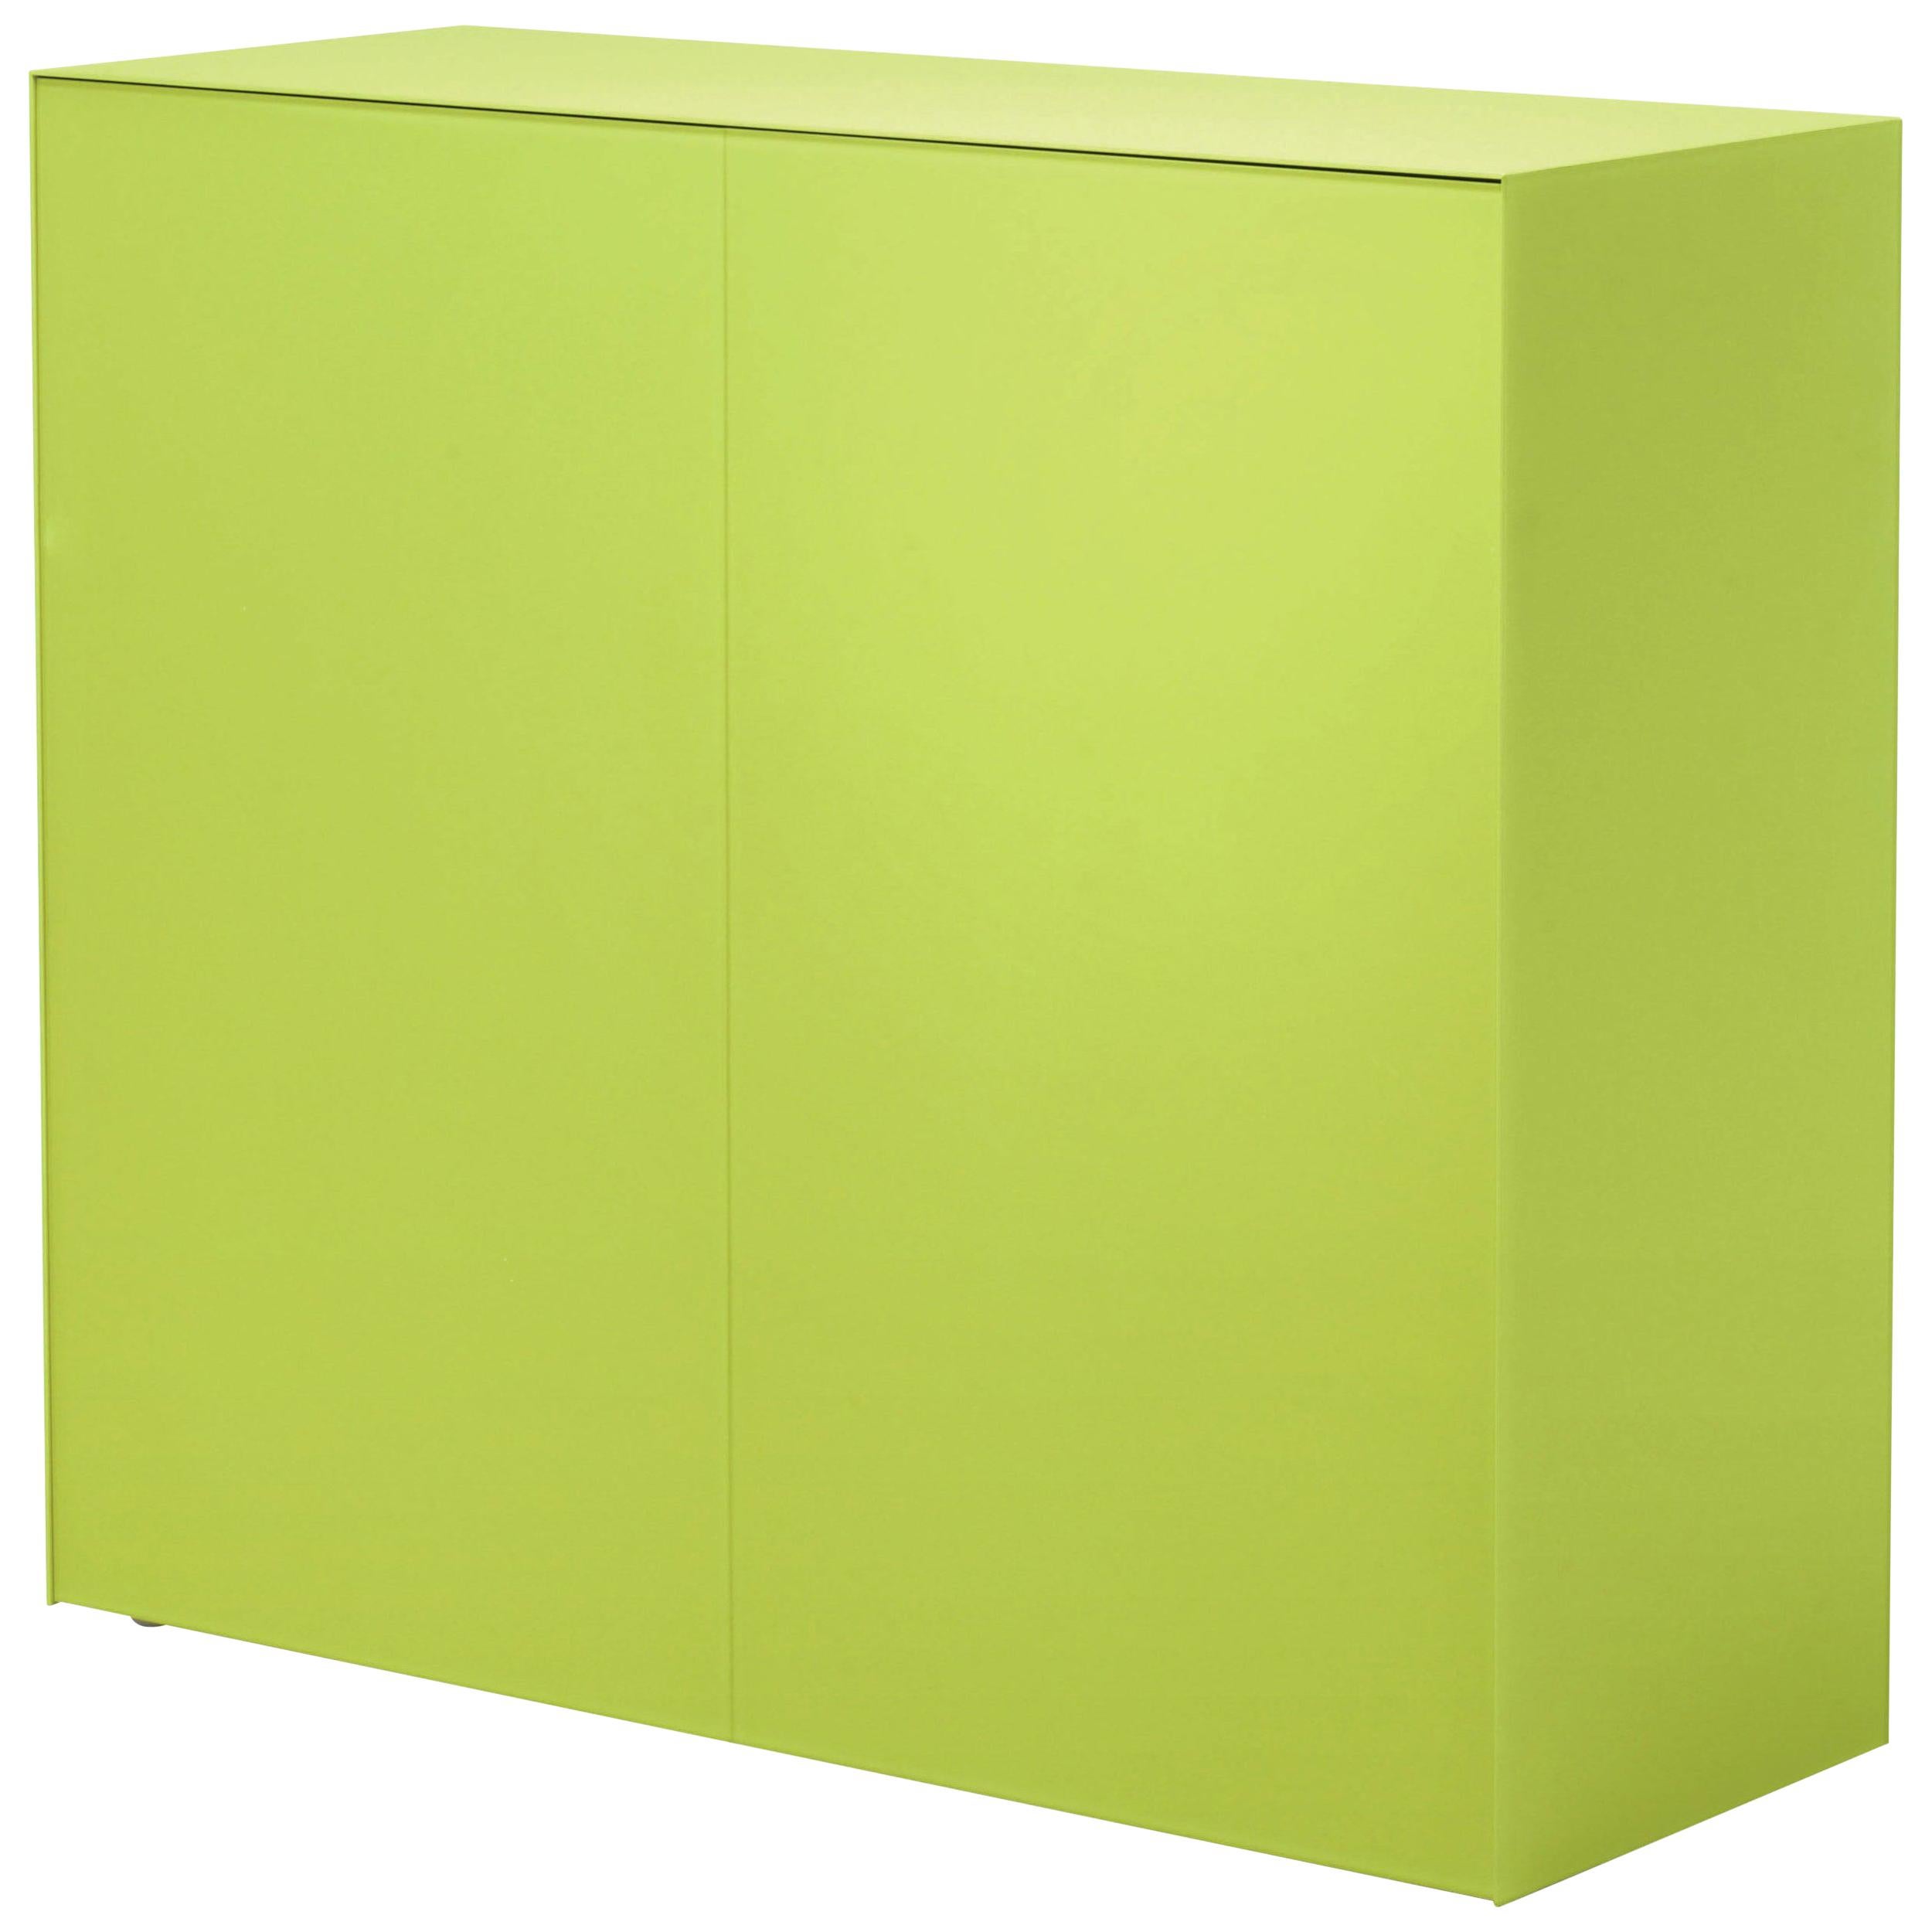 Magic Box MGB05 Cabinet in Apple Green Glass, by Piero Lissoni from Glas Italia